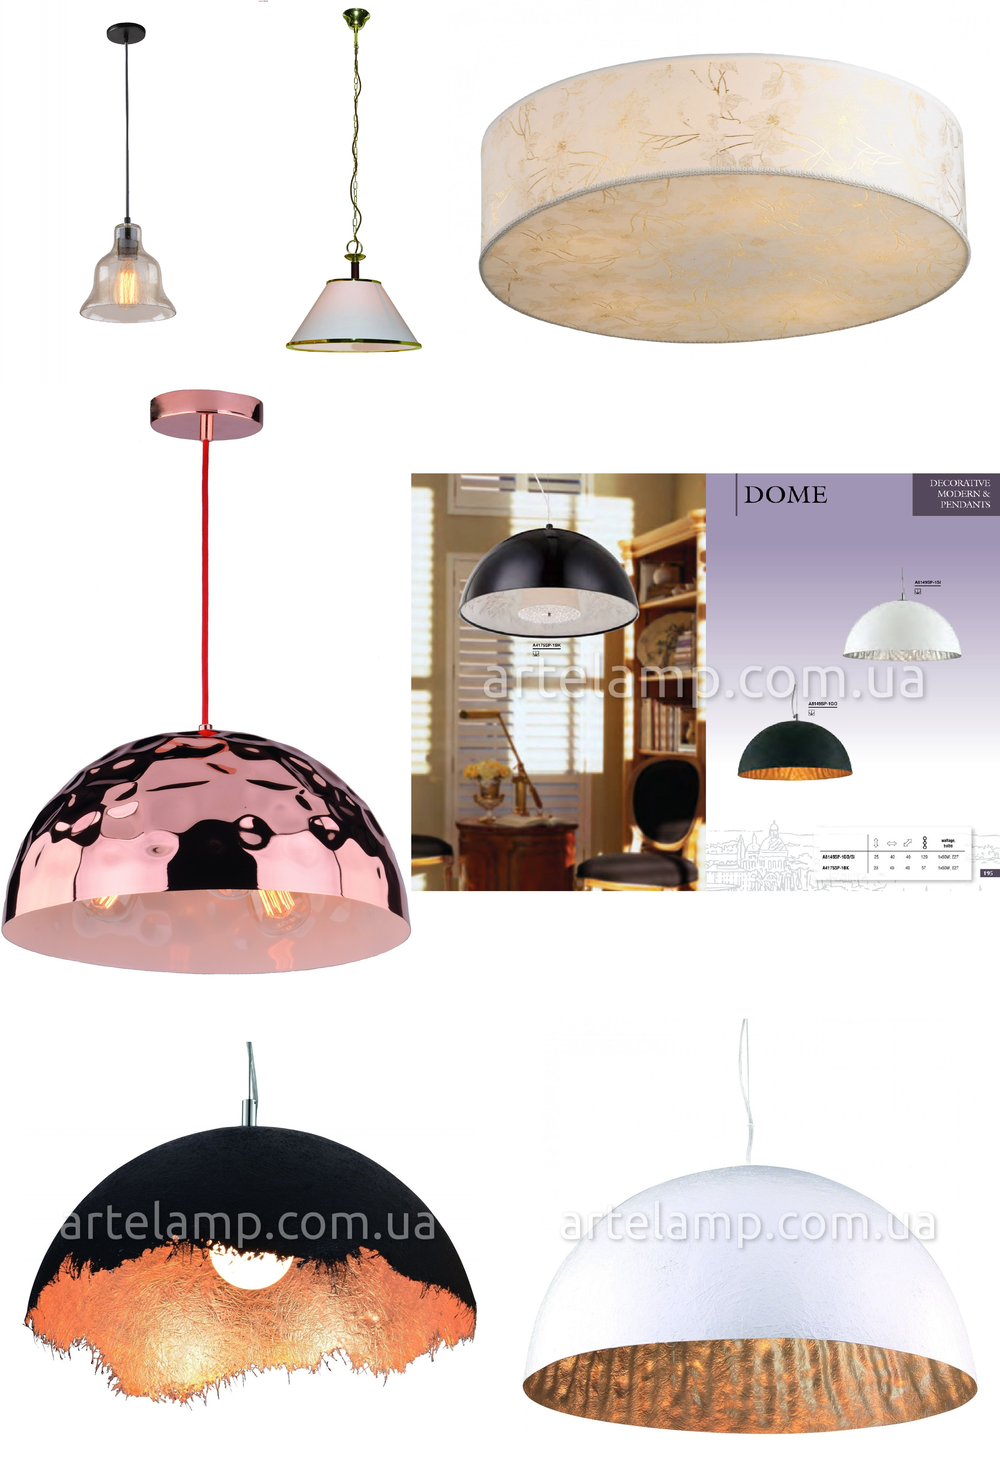 « подвесные». Arte Lamp серия Dome артикул A4175SP-1BK